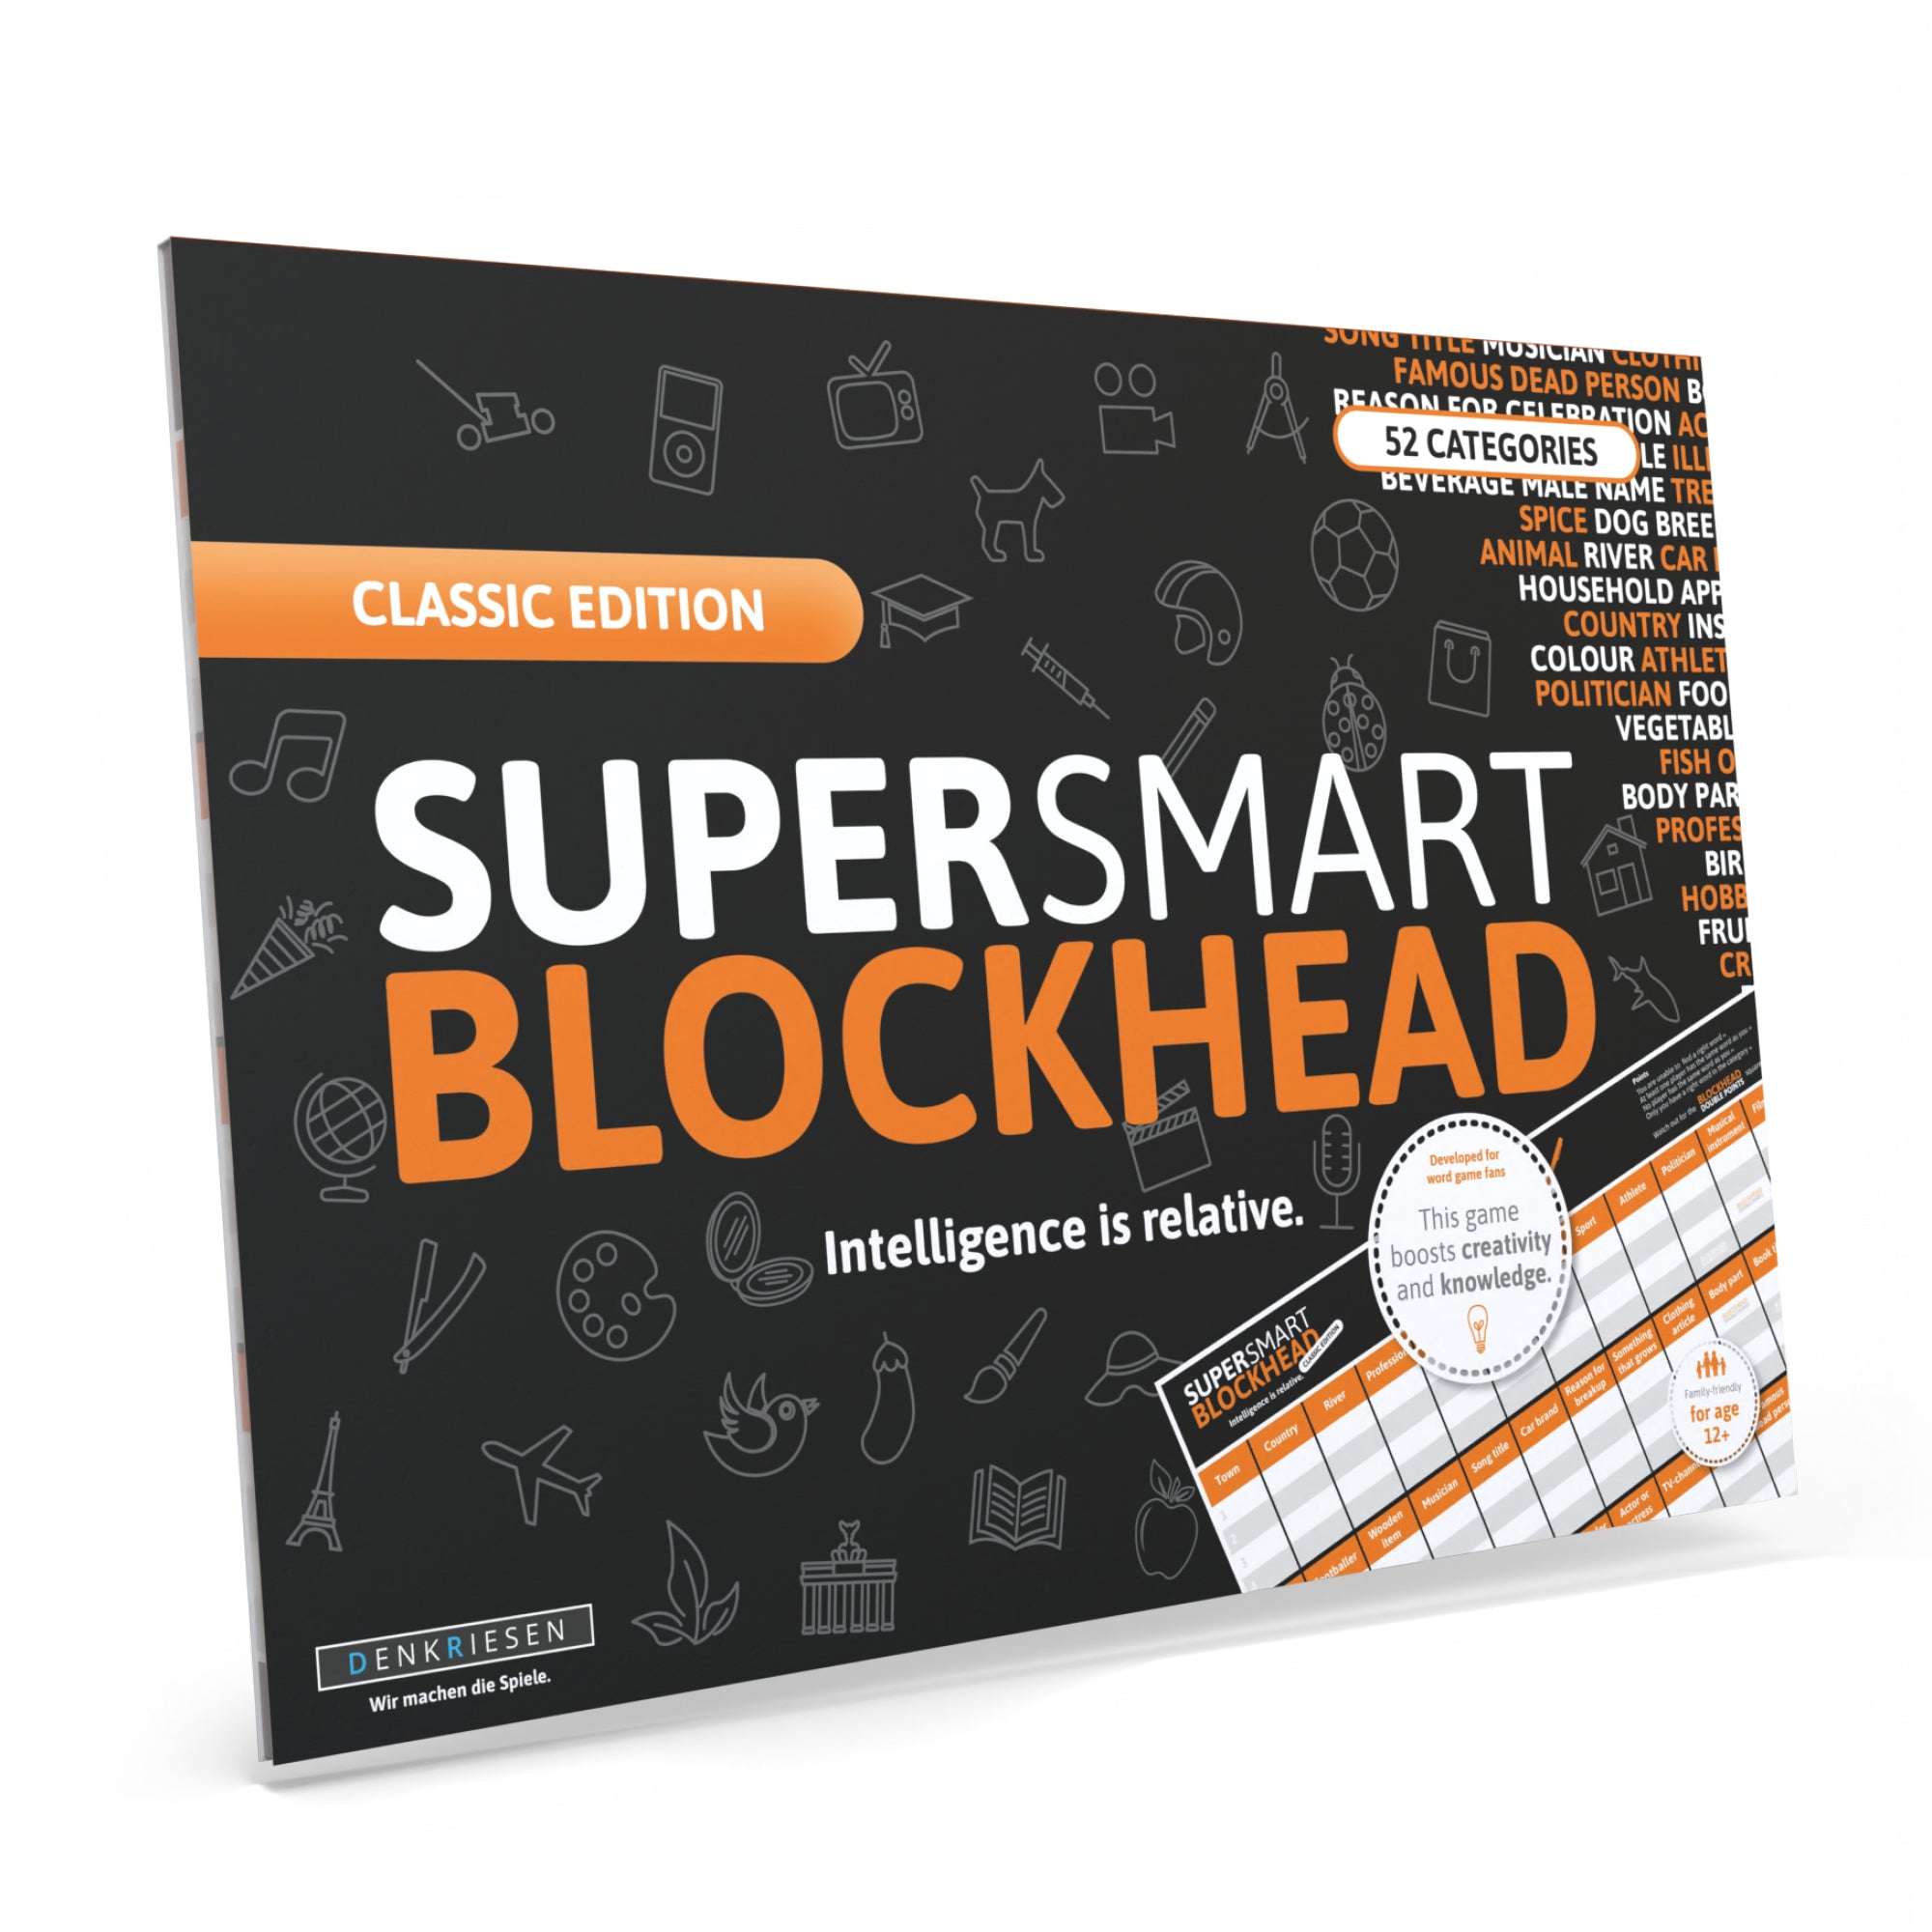 Super Smart Blockhead – "Intelligence is relative." | English | A3 Game Pad